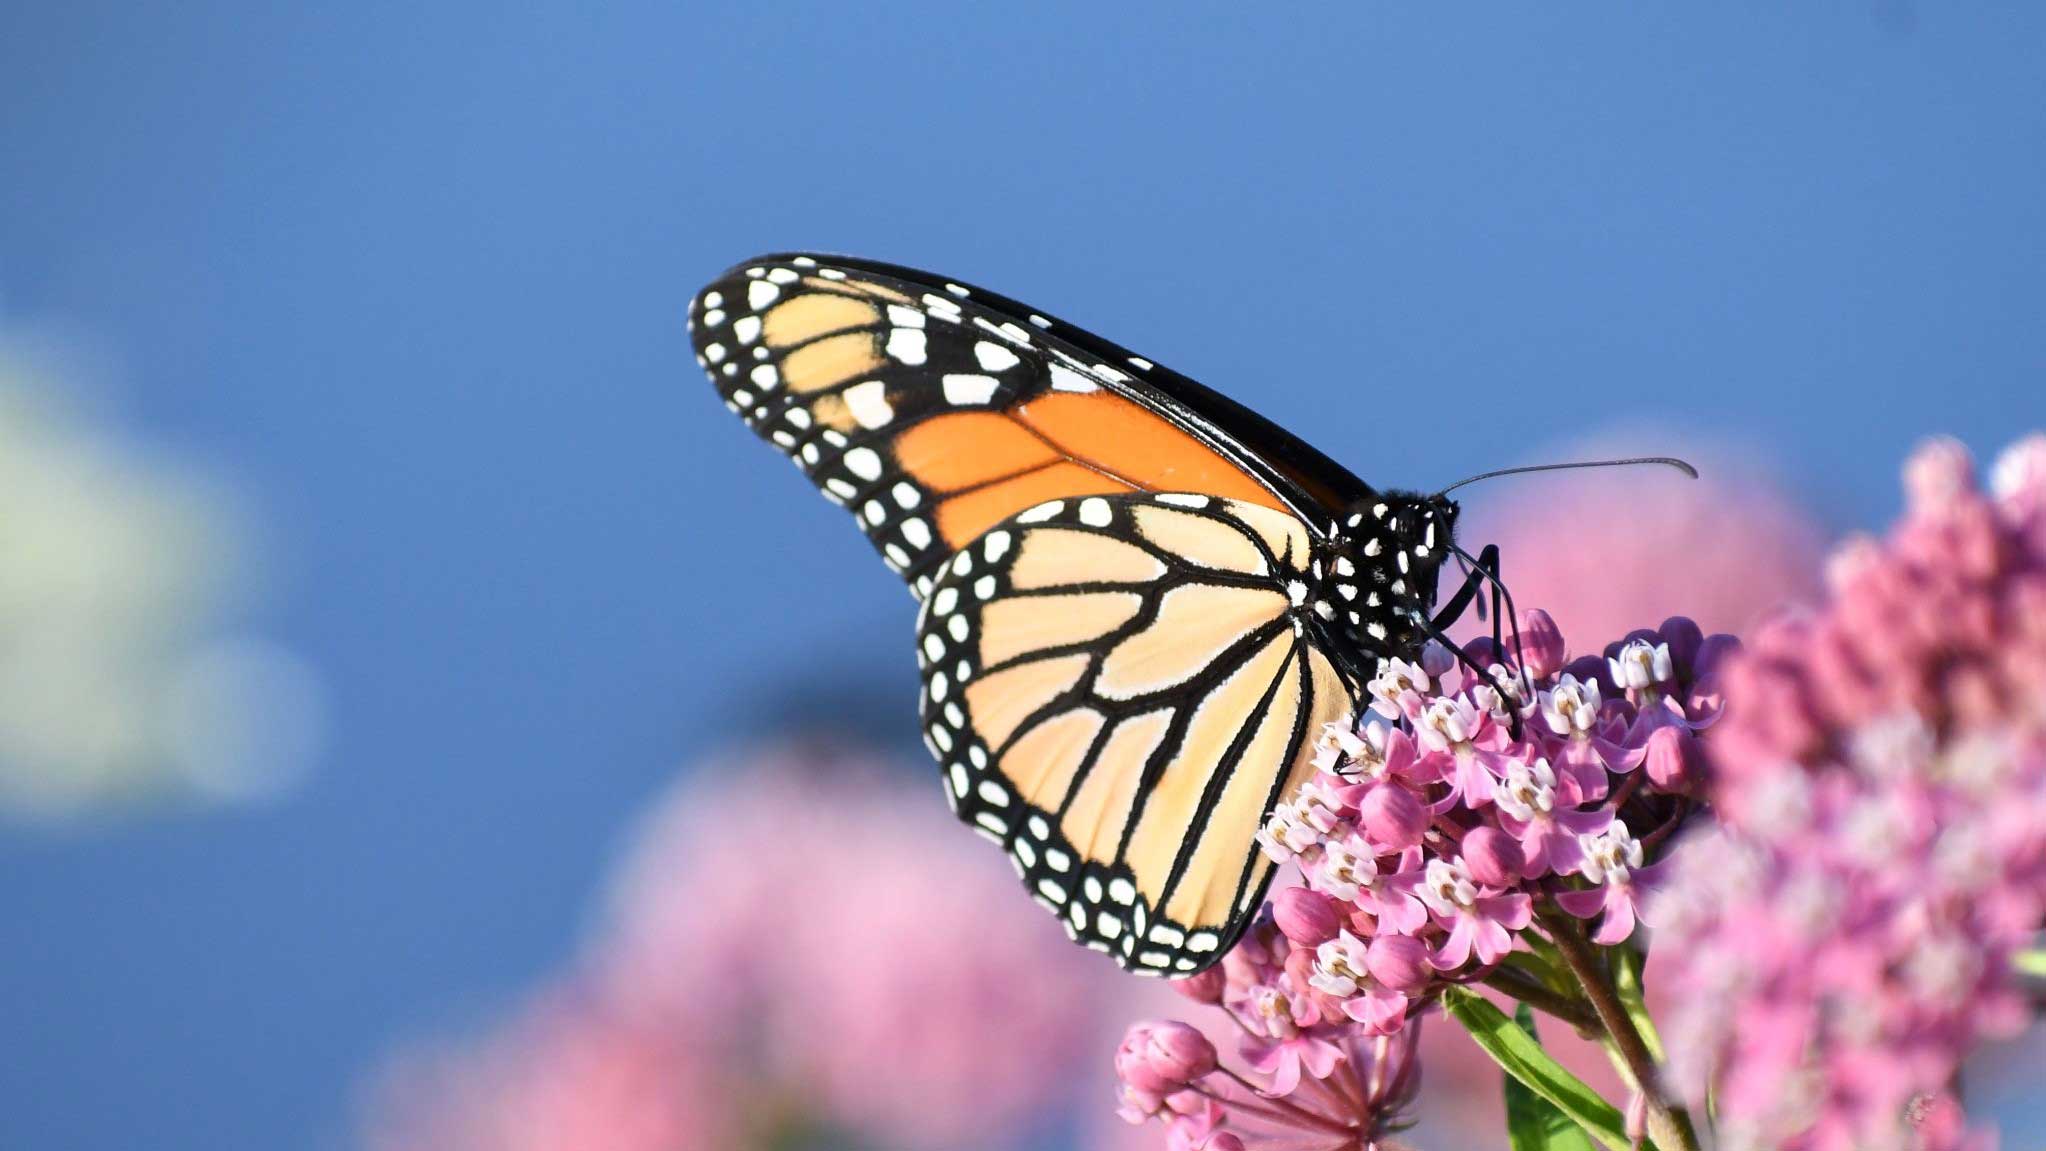 A monarch butterfly on milkweed.